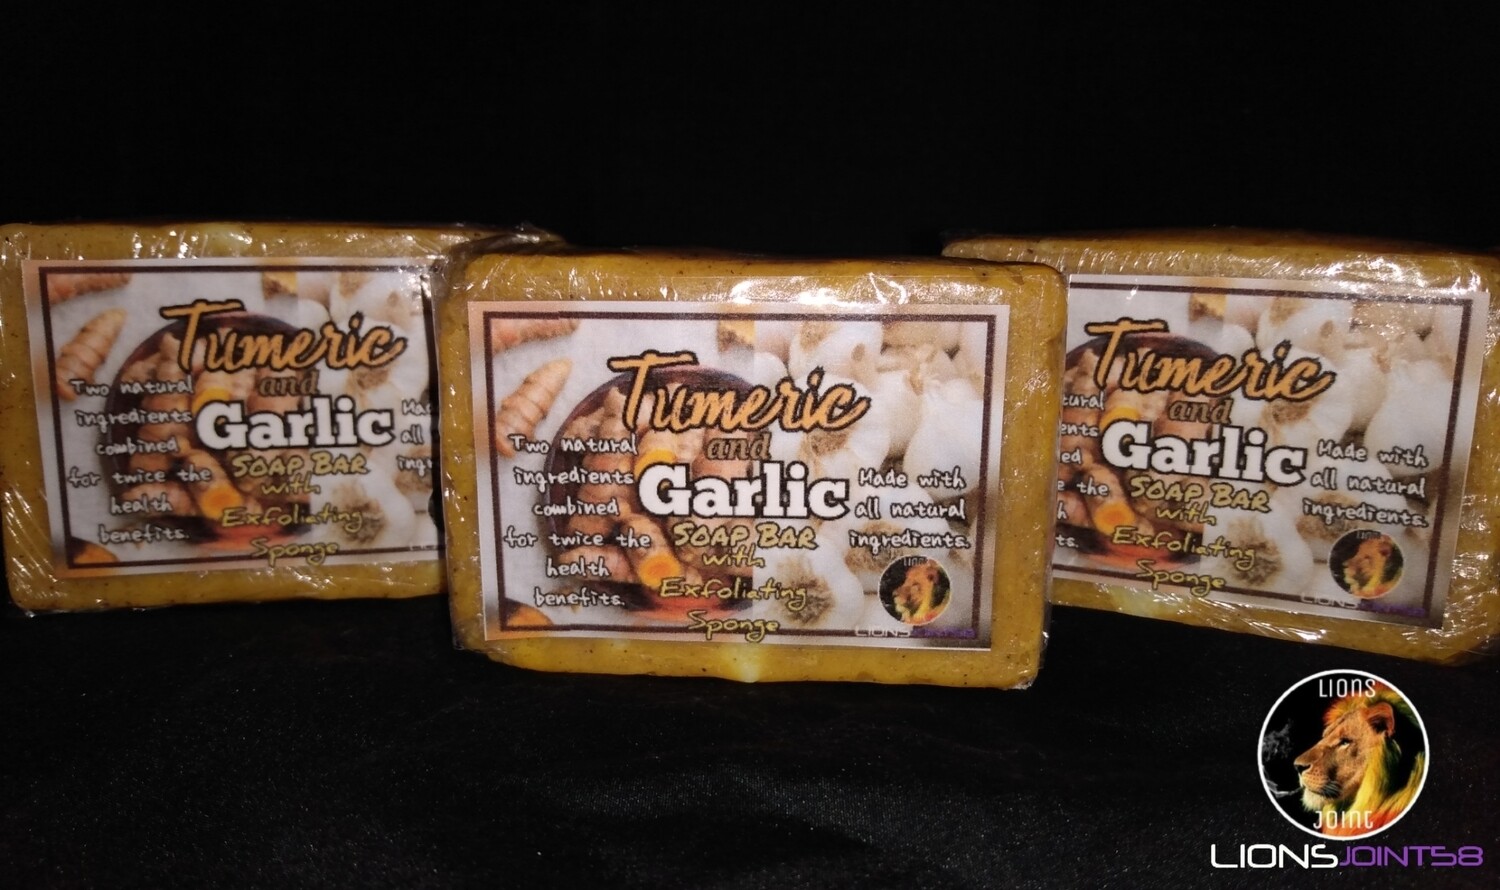 Tumeric and Garlic Soap Bar with Exfoliating Sponge